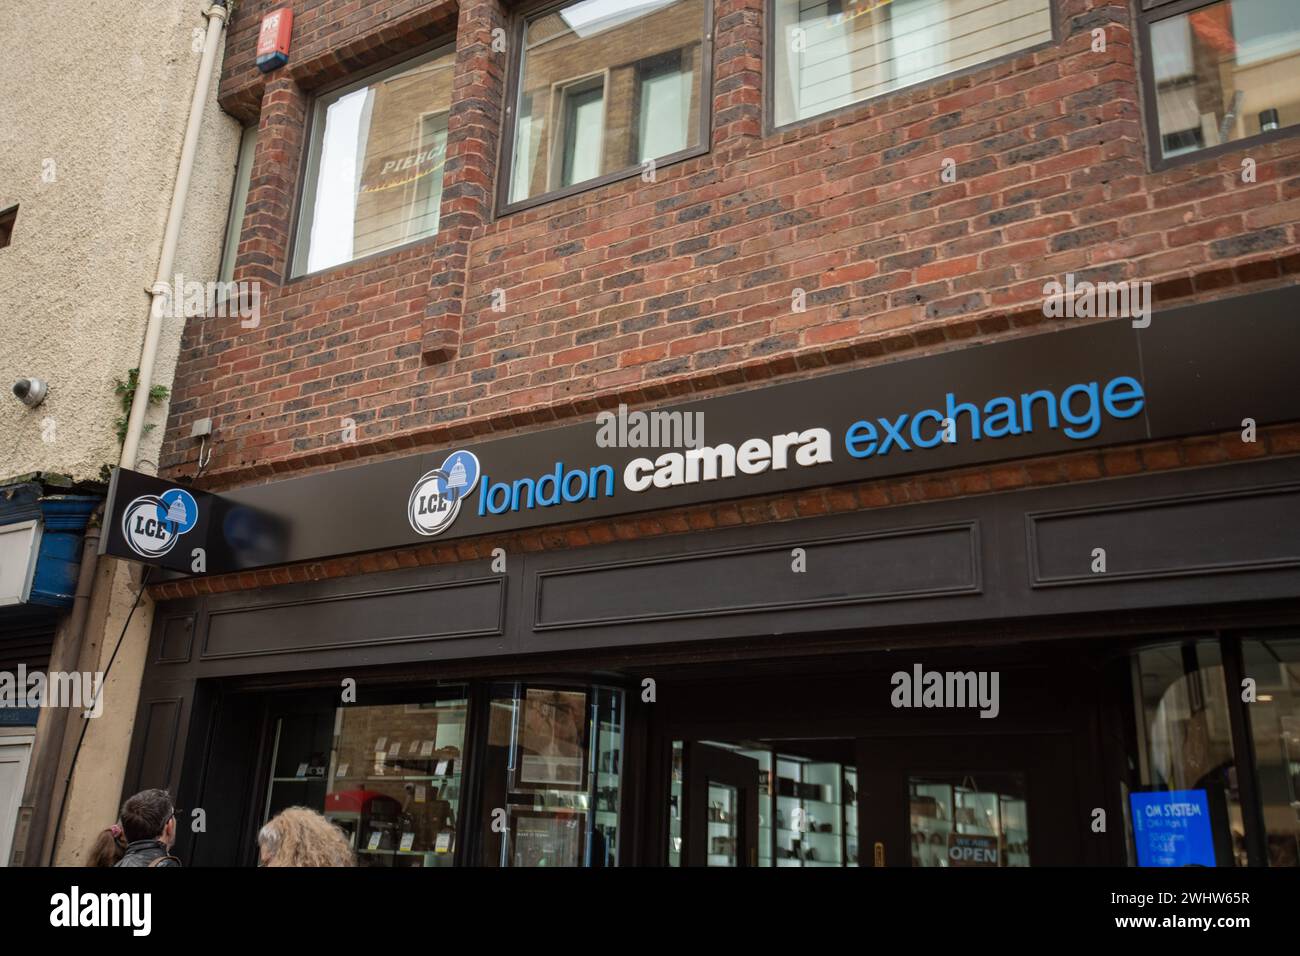 London Camera Exchange, Oxford Stock Photo